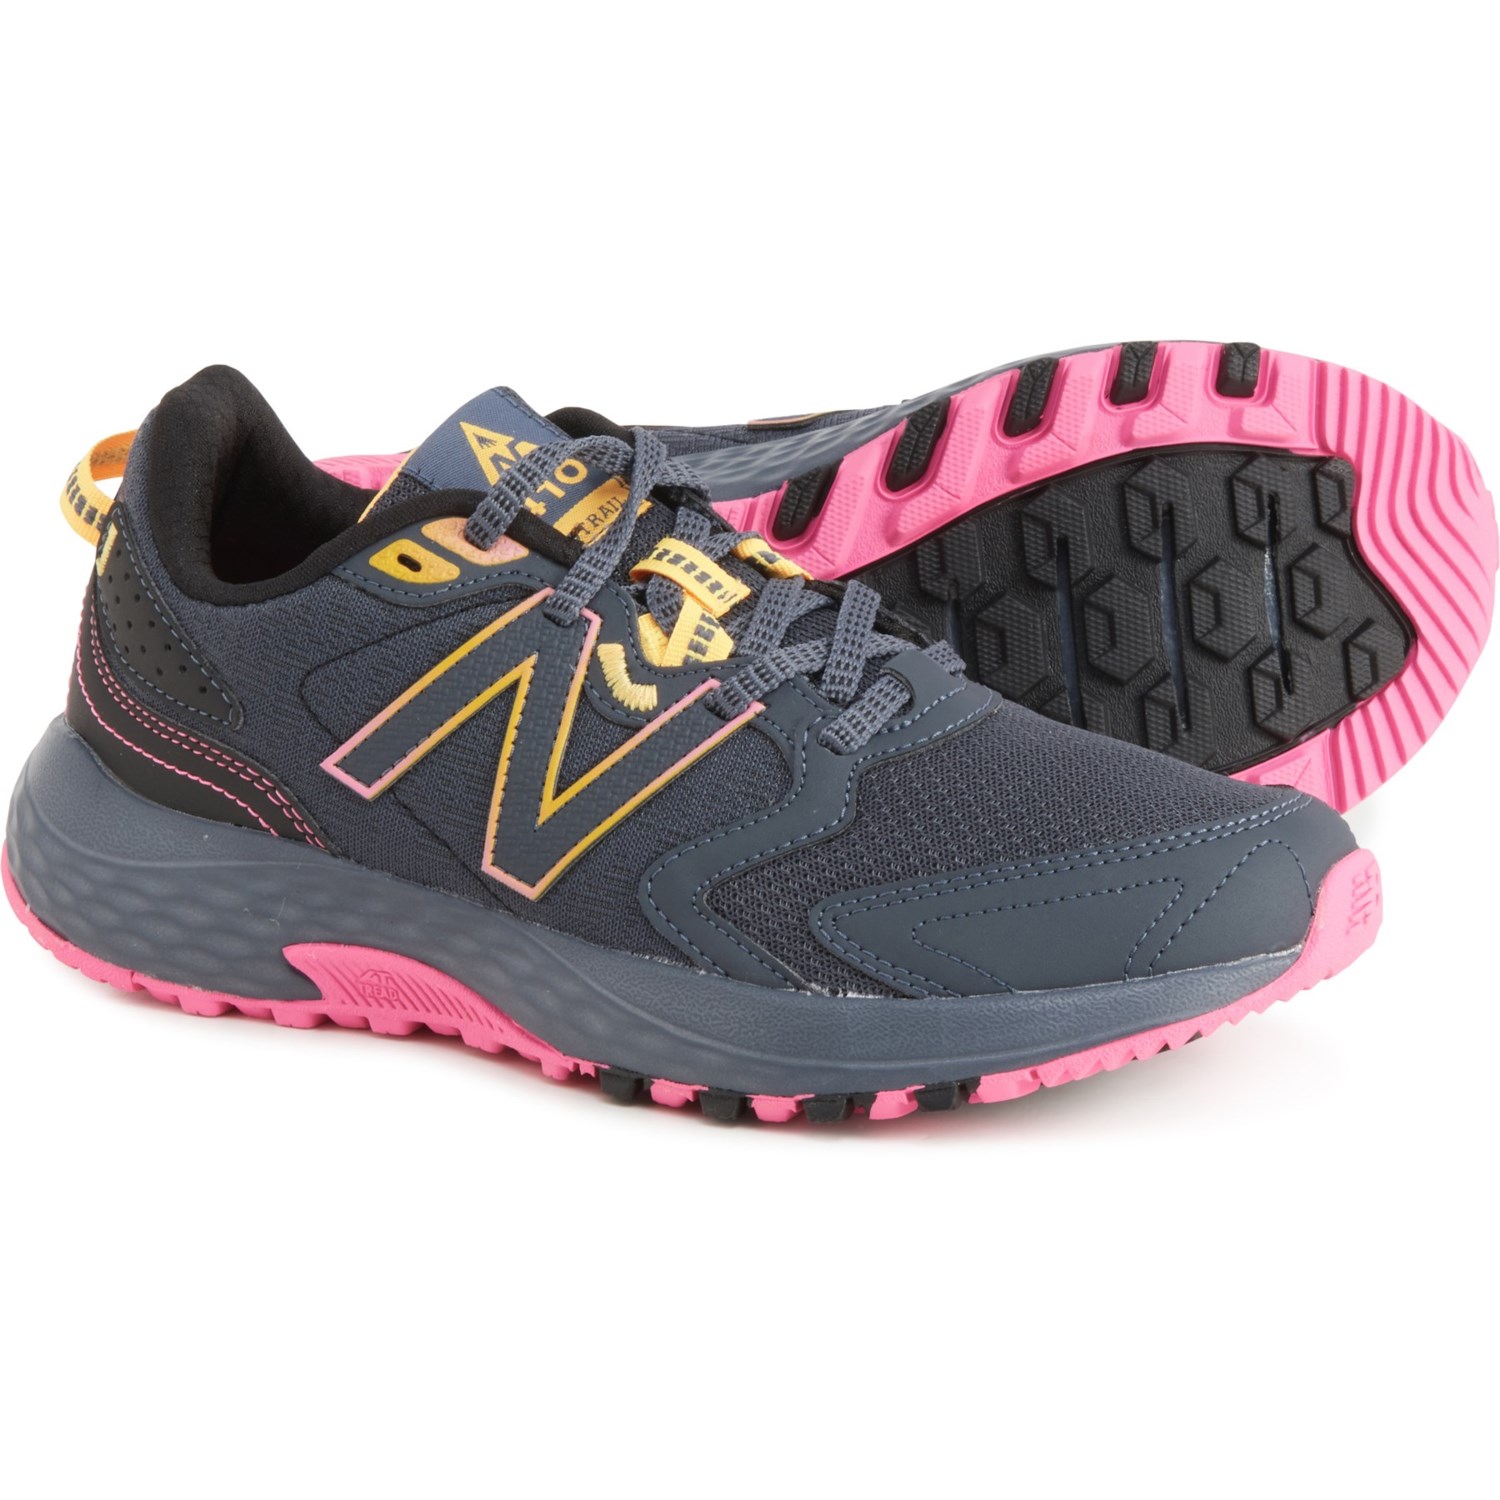 New Balance 410 v7 Trail Running Shoes (For Women)